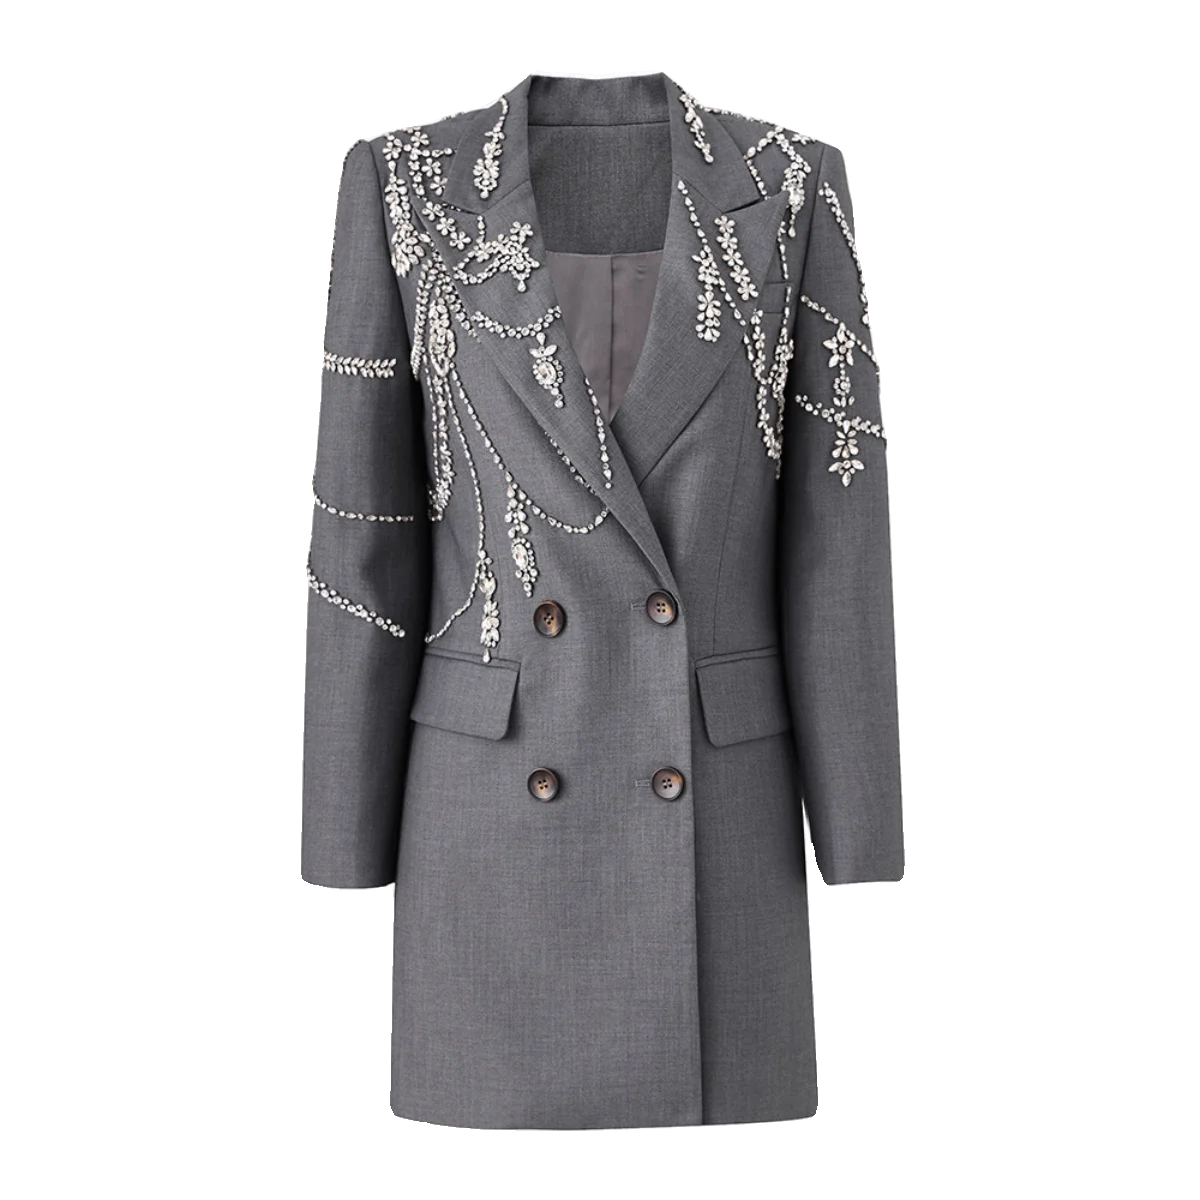 KIMLUD, Gray Blazer Handmade Crystal Inlaid Diamond Long Blazer Dress Jacket Double Breasted Button Blazer Suit Outfit Women, gray jacket / S, KIMLUD Womens Clothes